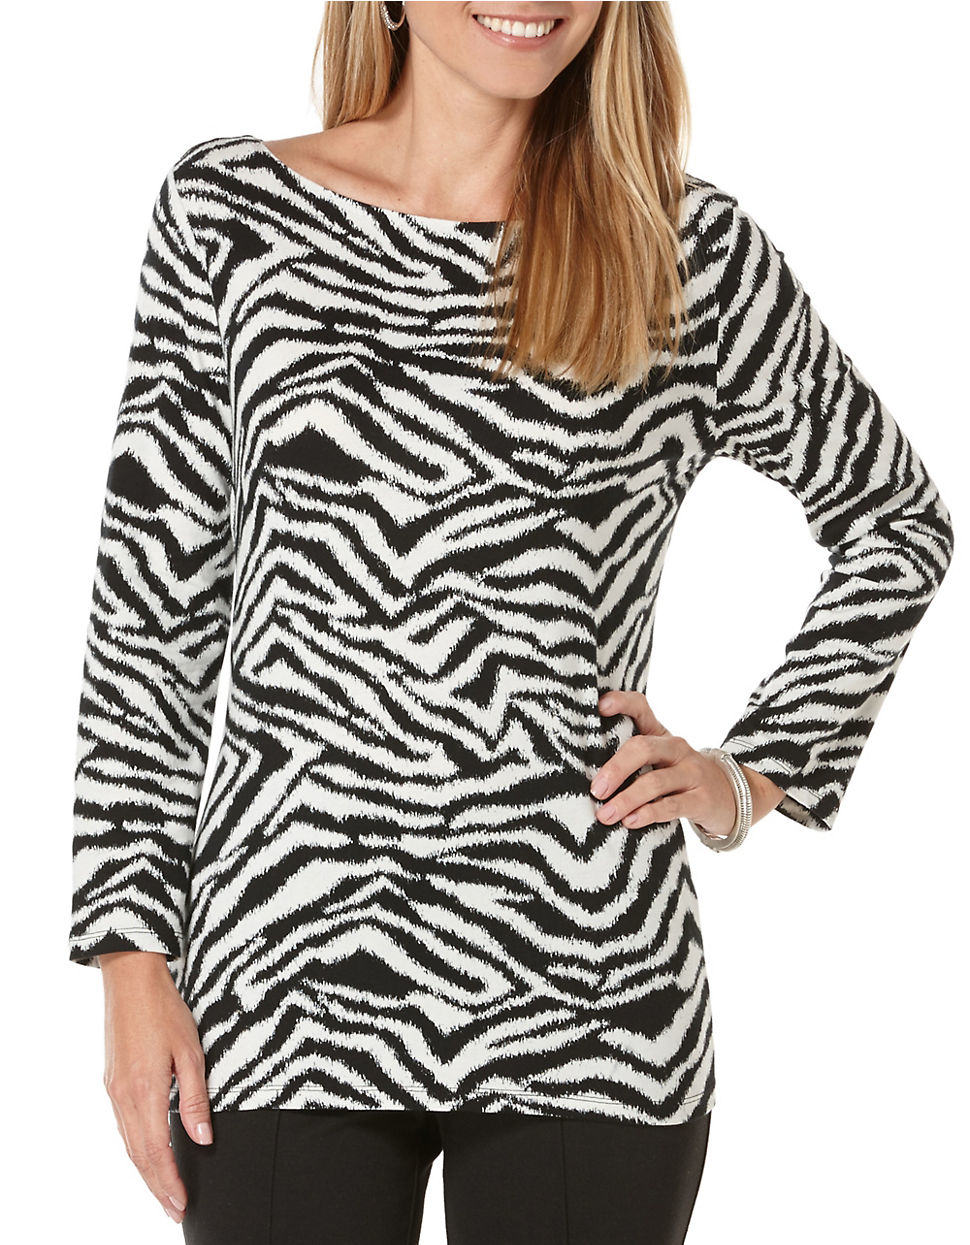 Lyst - Rafaella Petite Zebra-print Boatneck Fleece Top in White